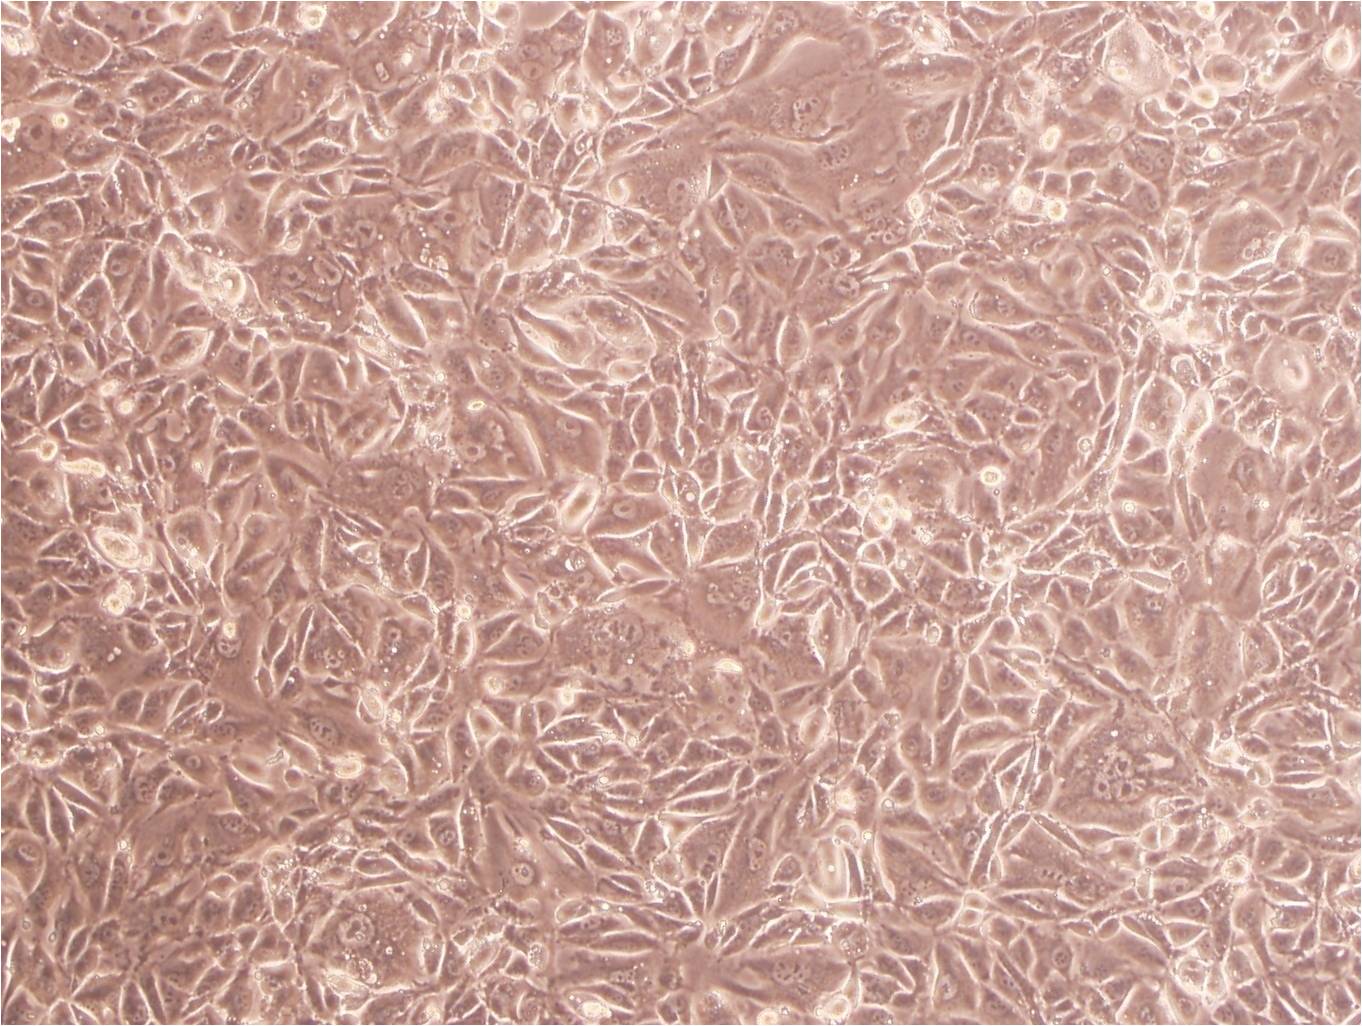 COLO 684 cell line人子宫腺癌细胞系